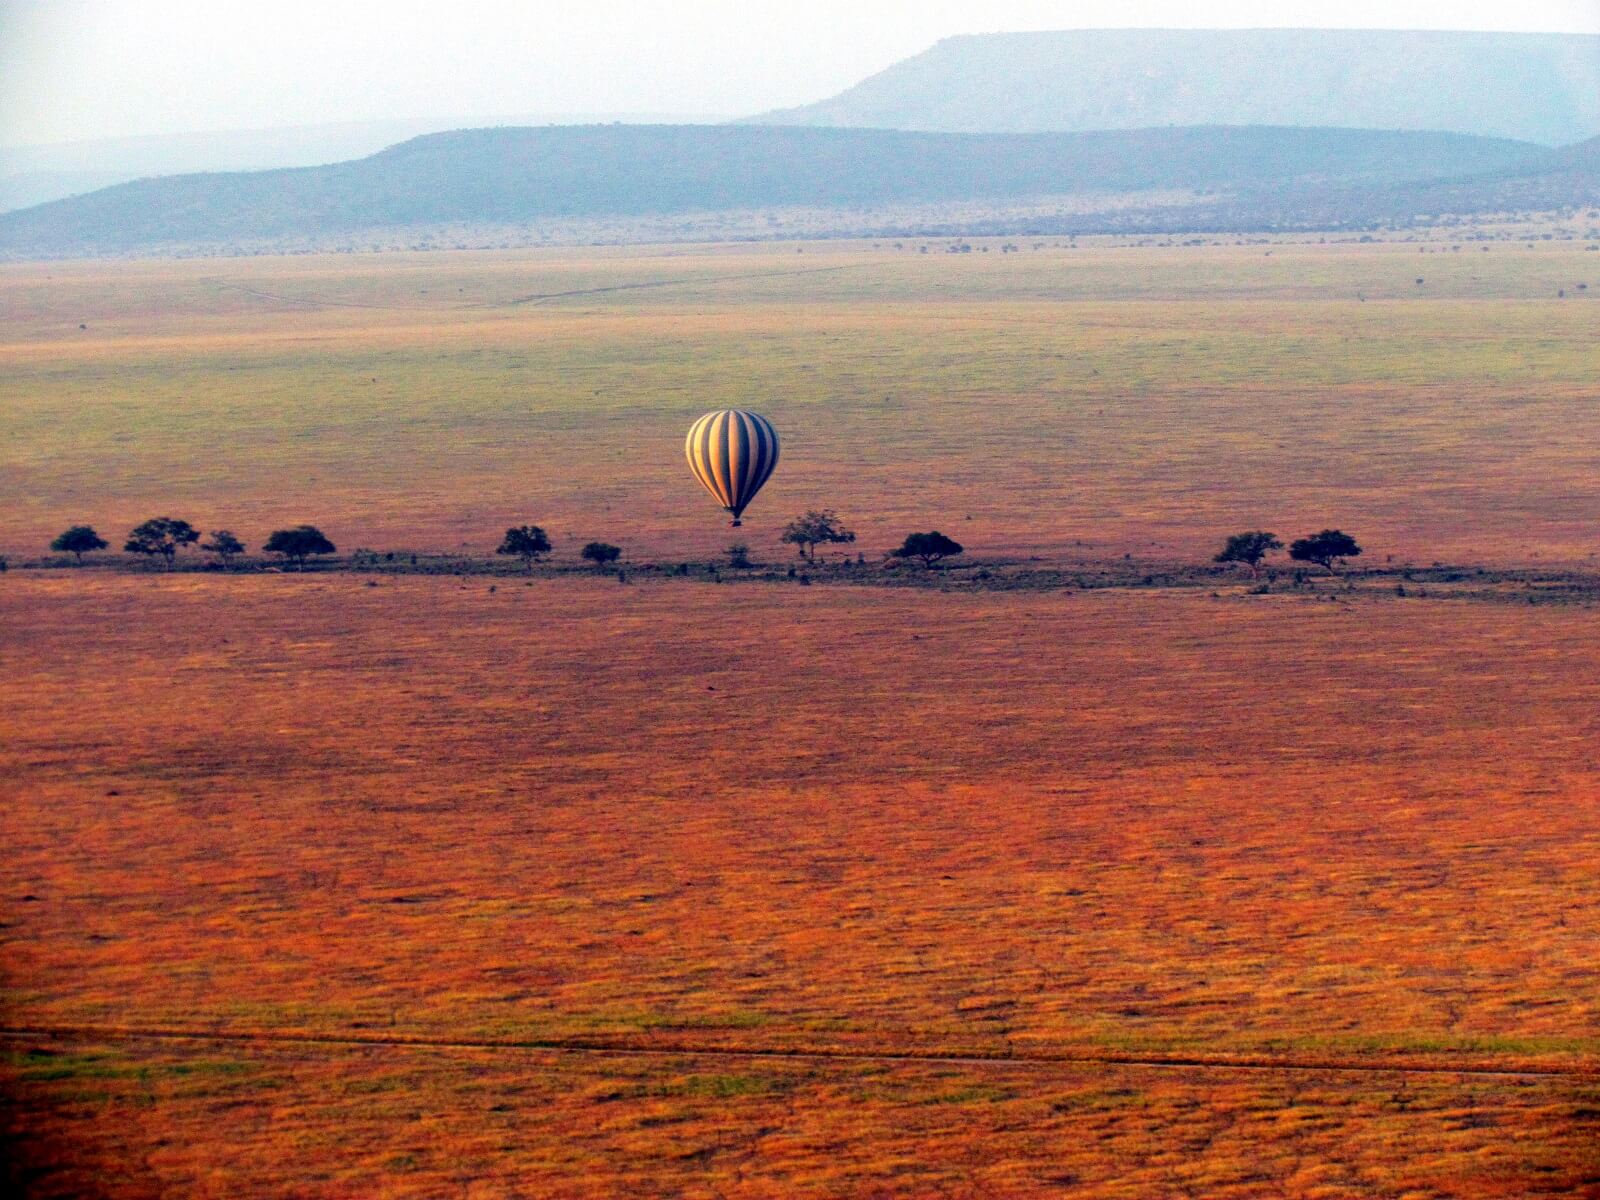 Serengeti Seronera image